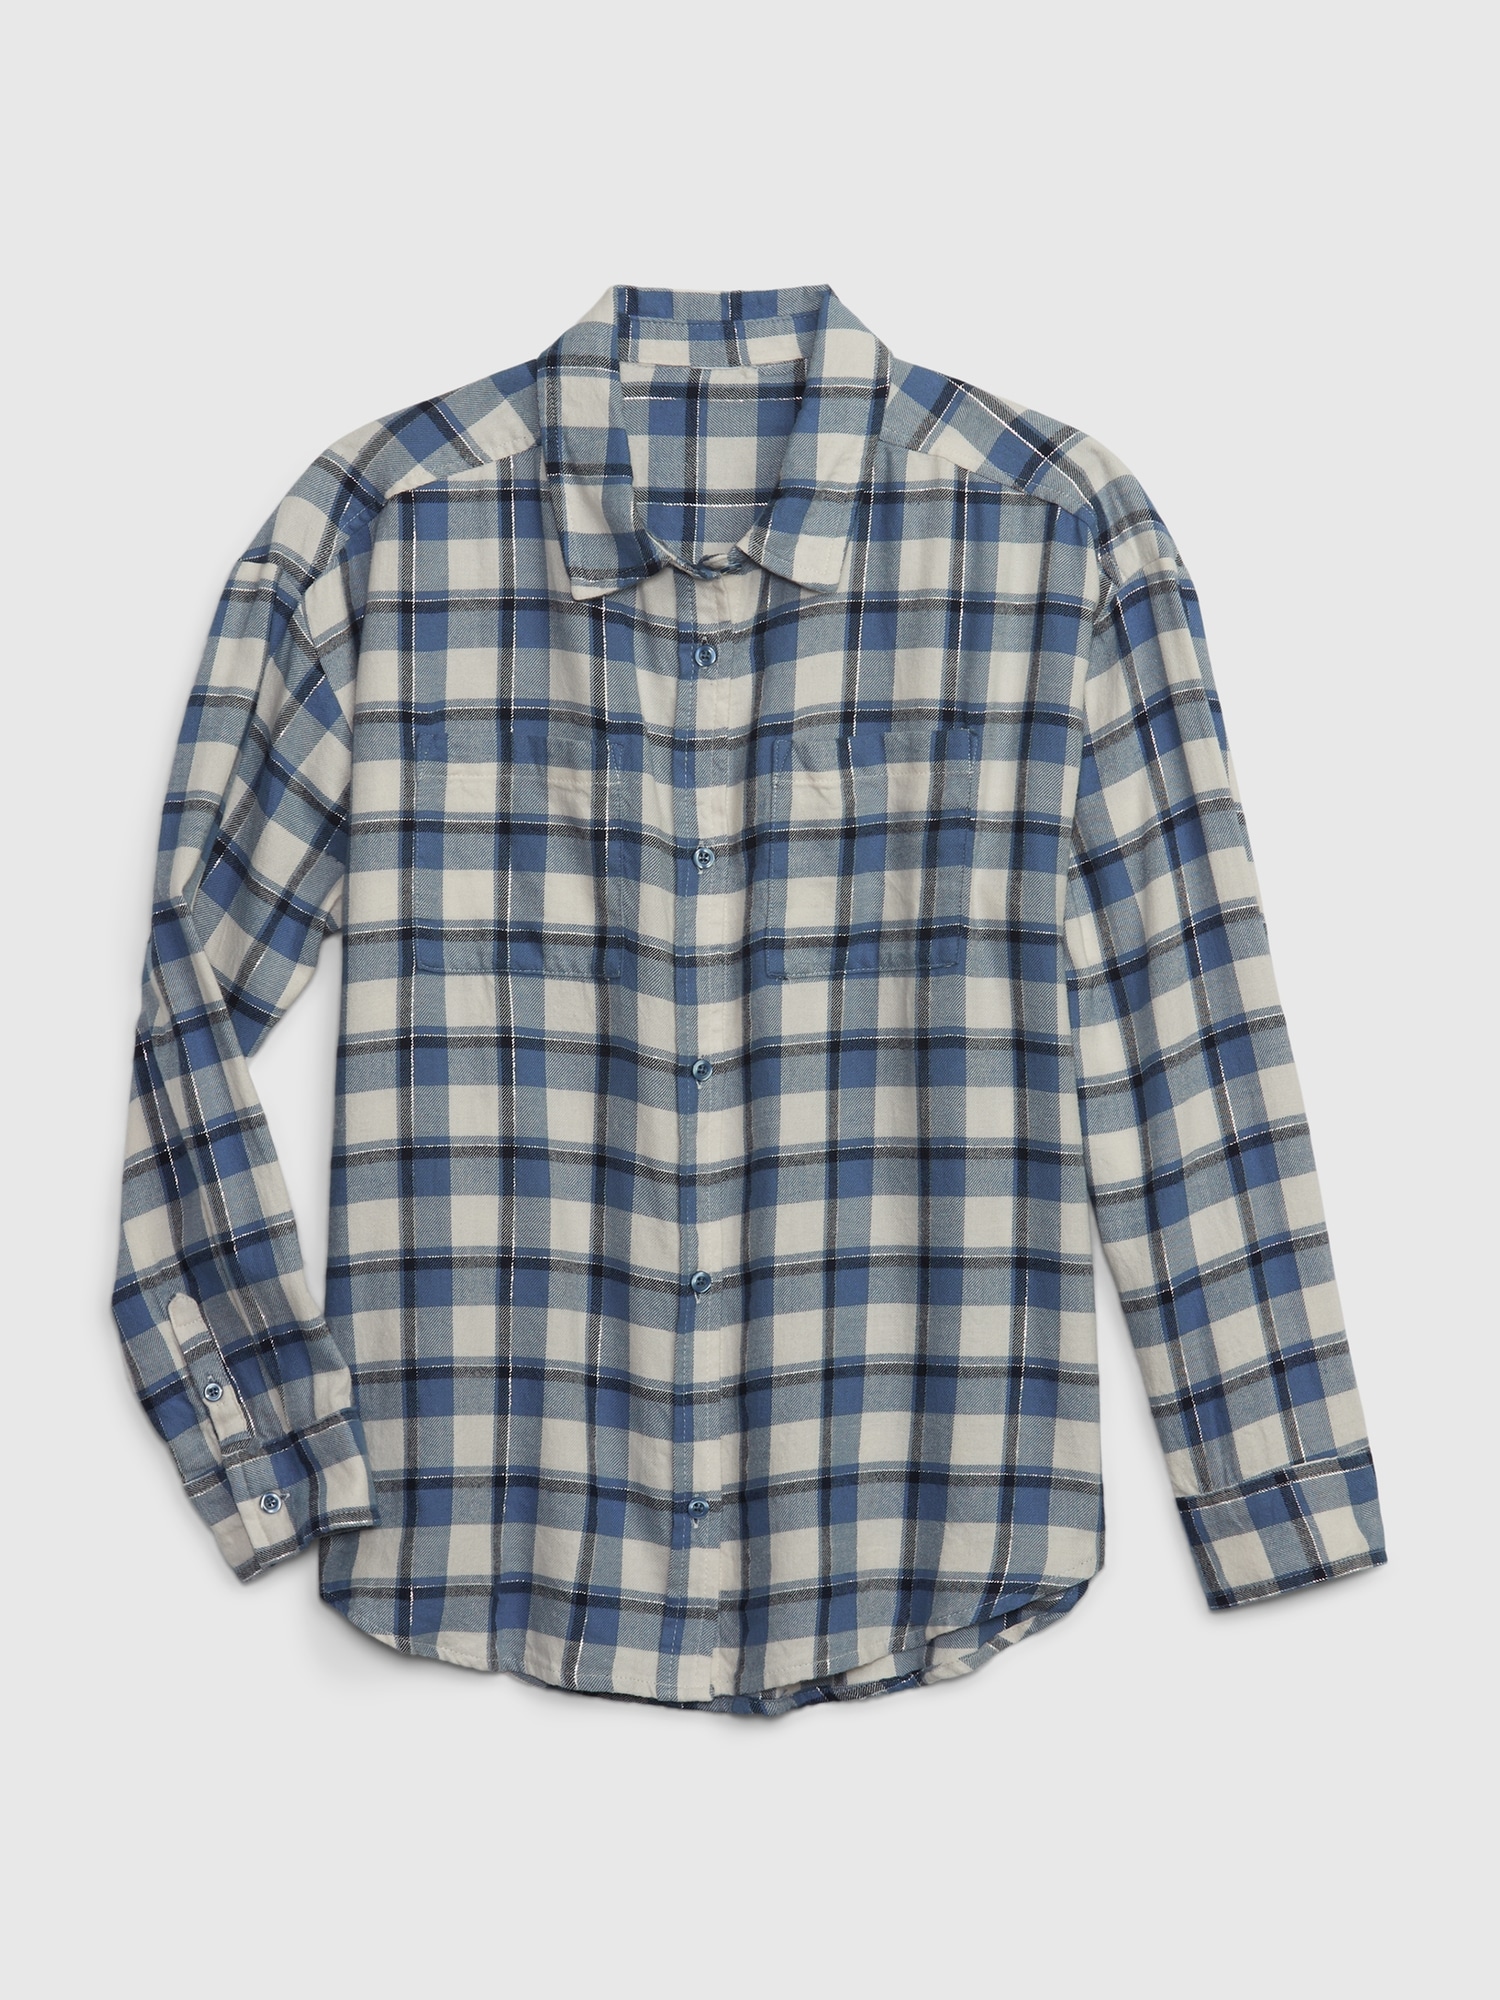 Kids Flannel Shirt | Gap